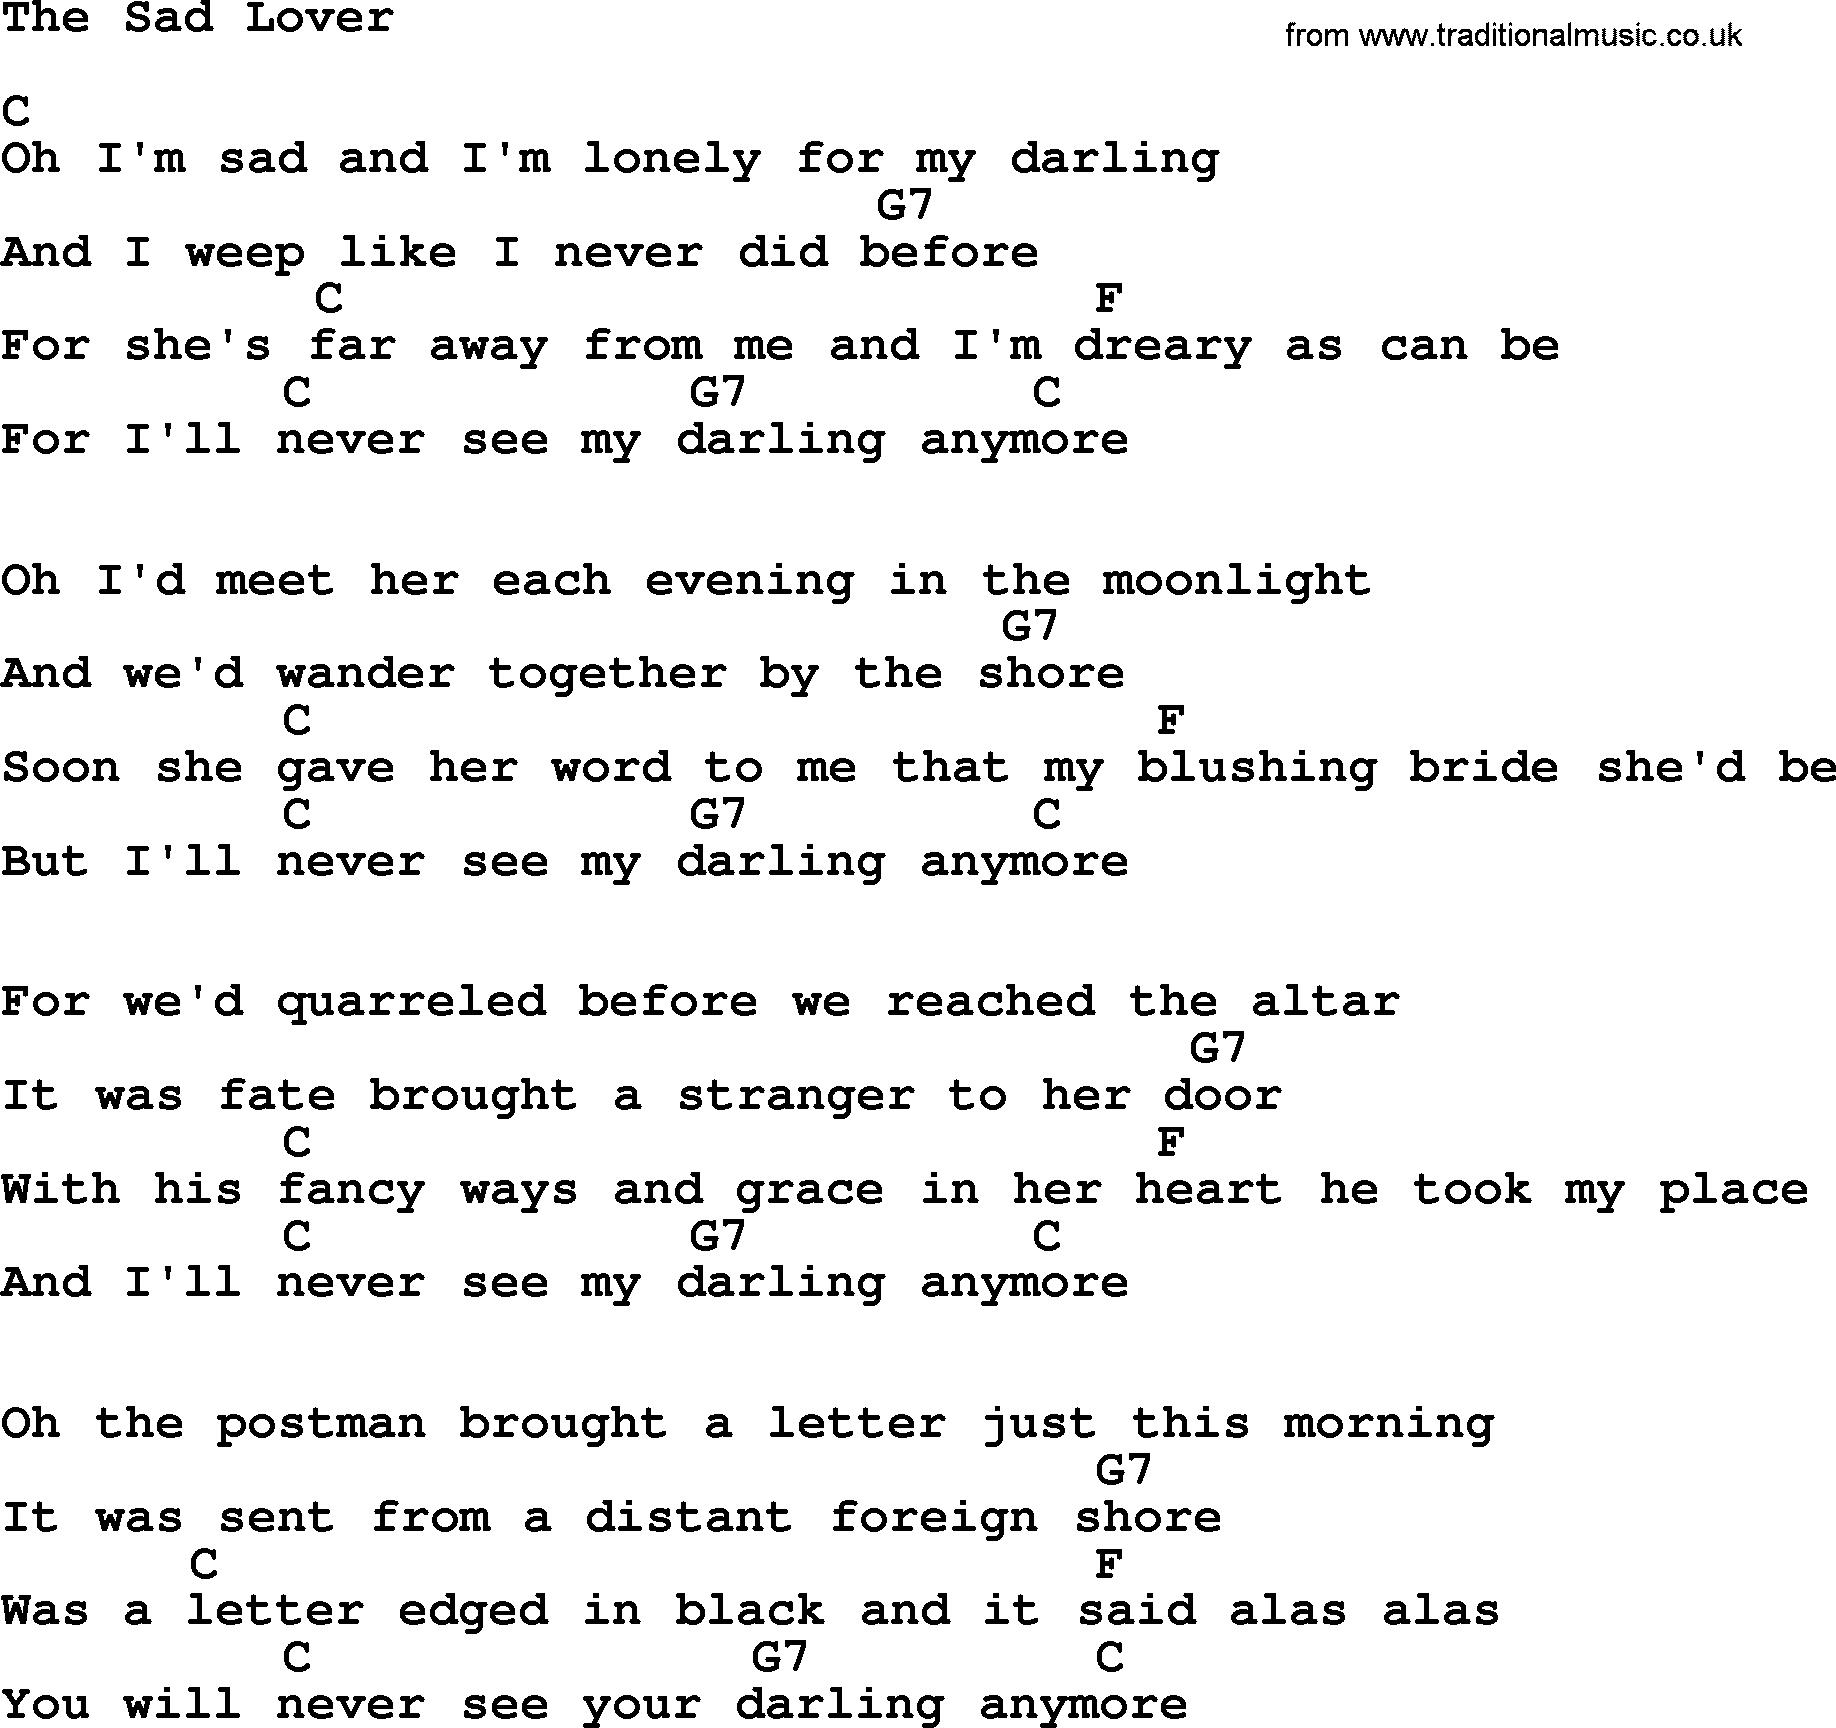 Marty Robbins song: The Sad Lover, lyrics and chords